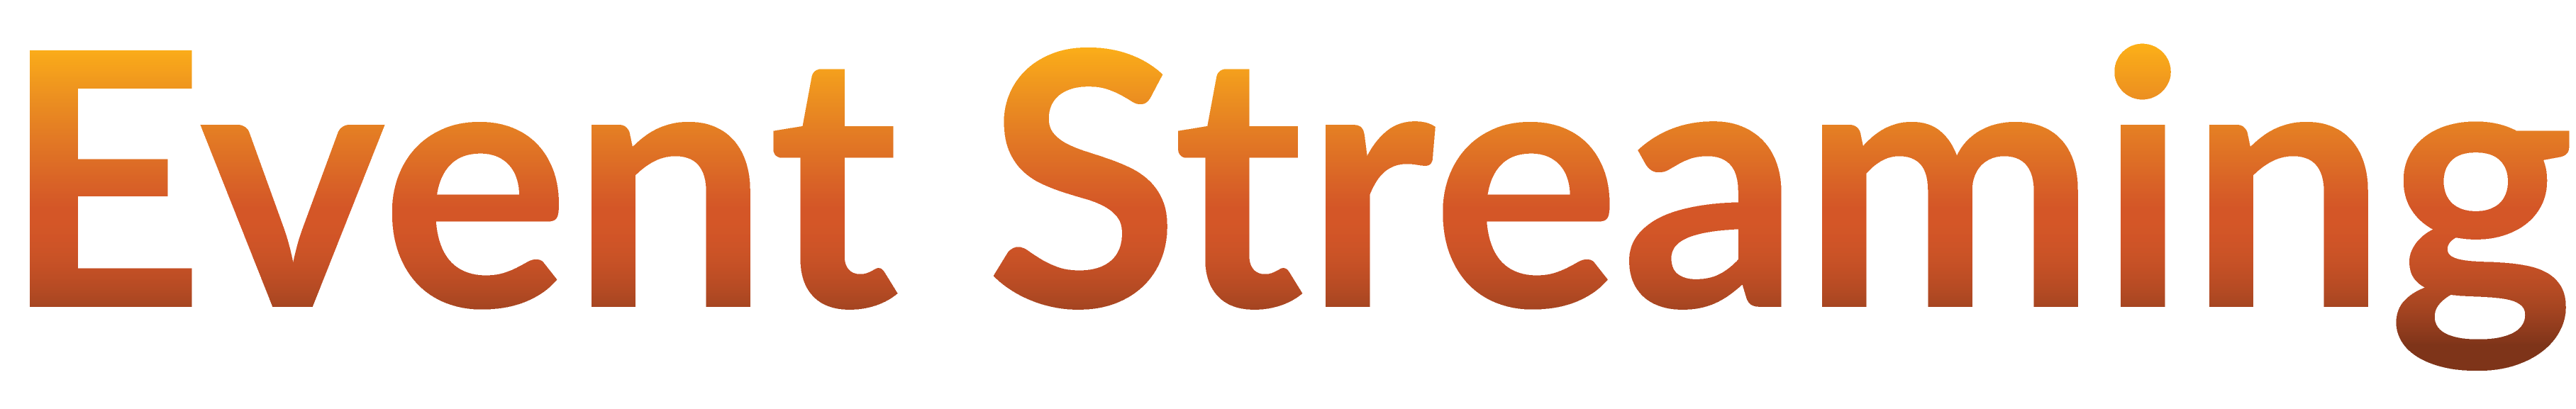 Event Streaming logo